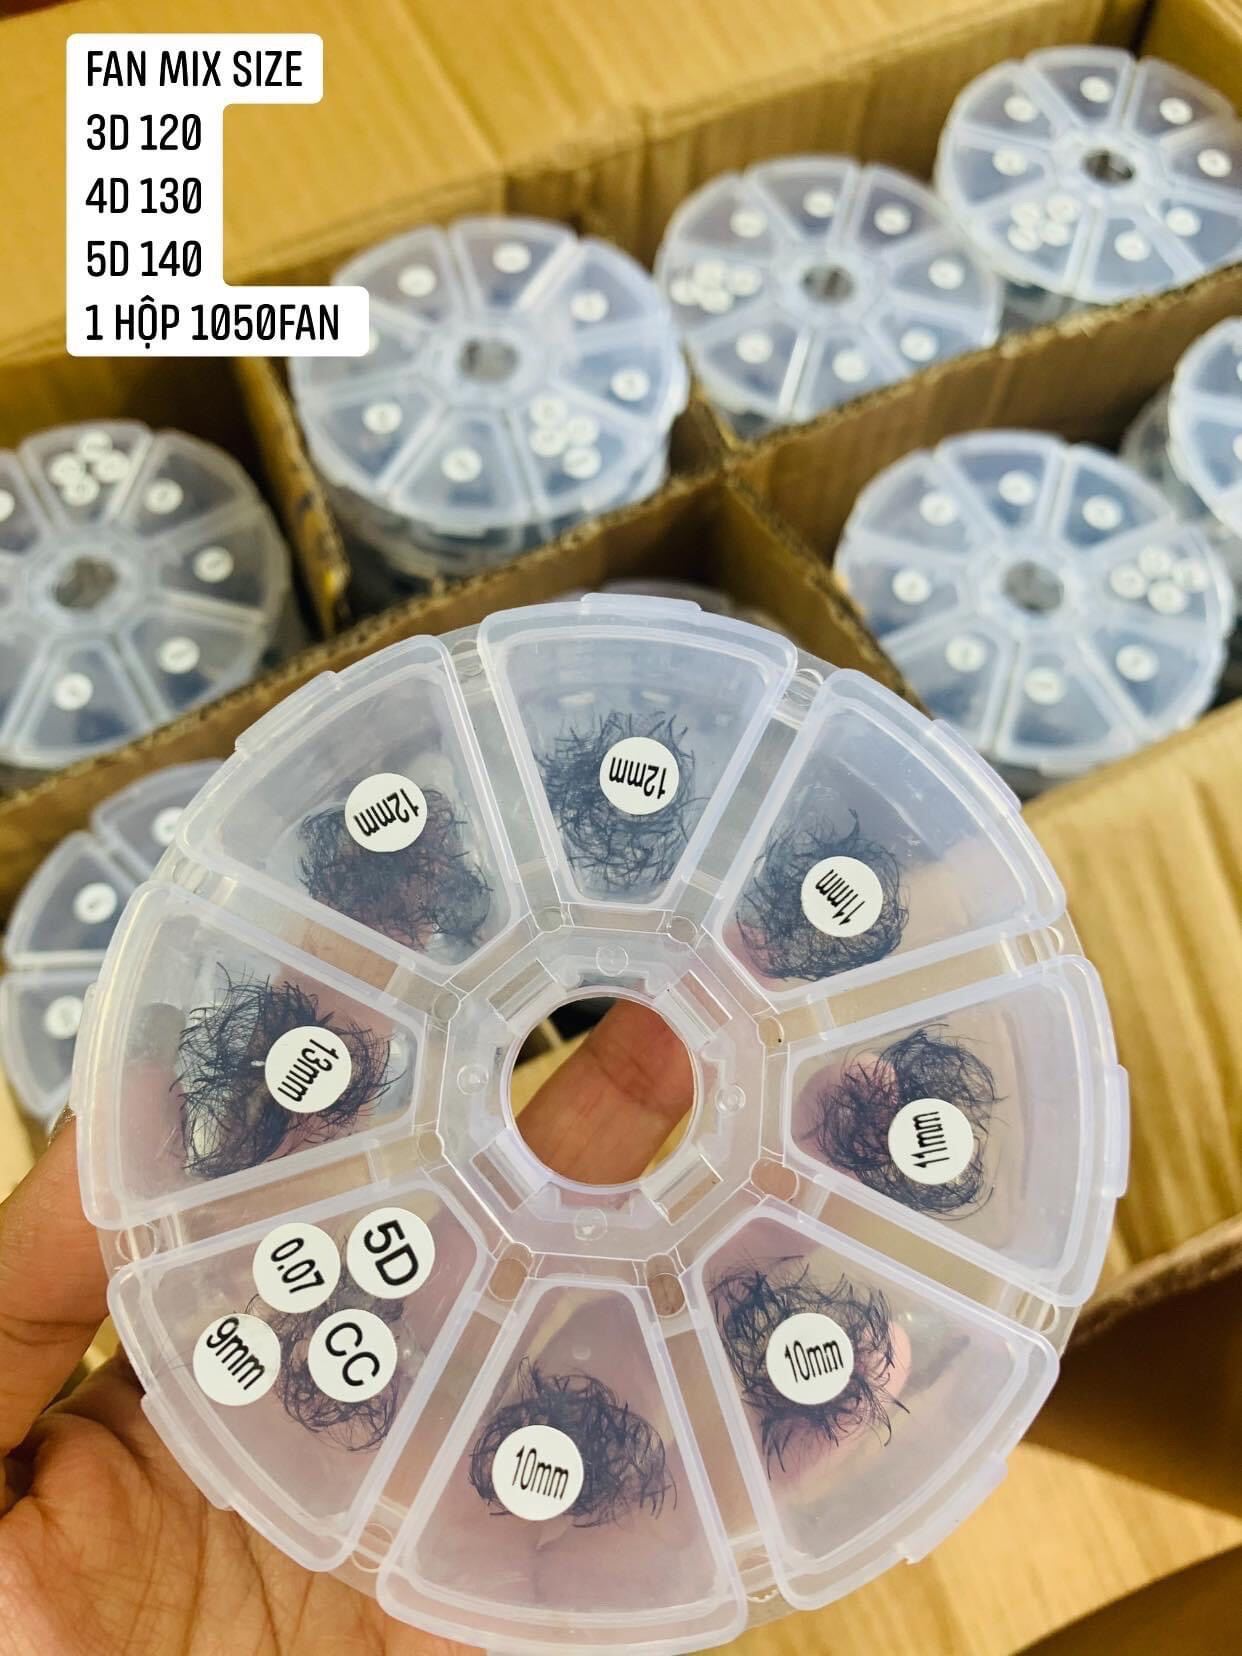 Mi Fan 3D -4D hộp mix size giá rẻ